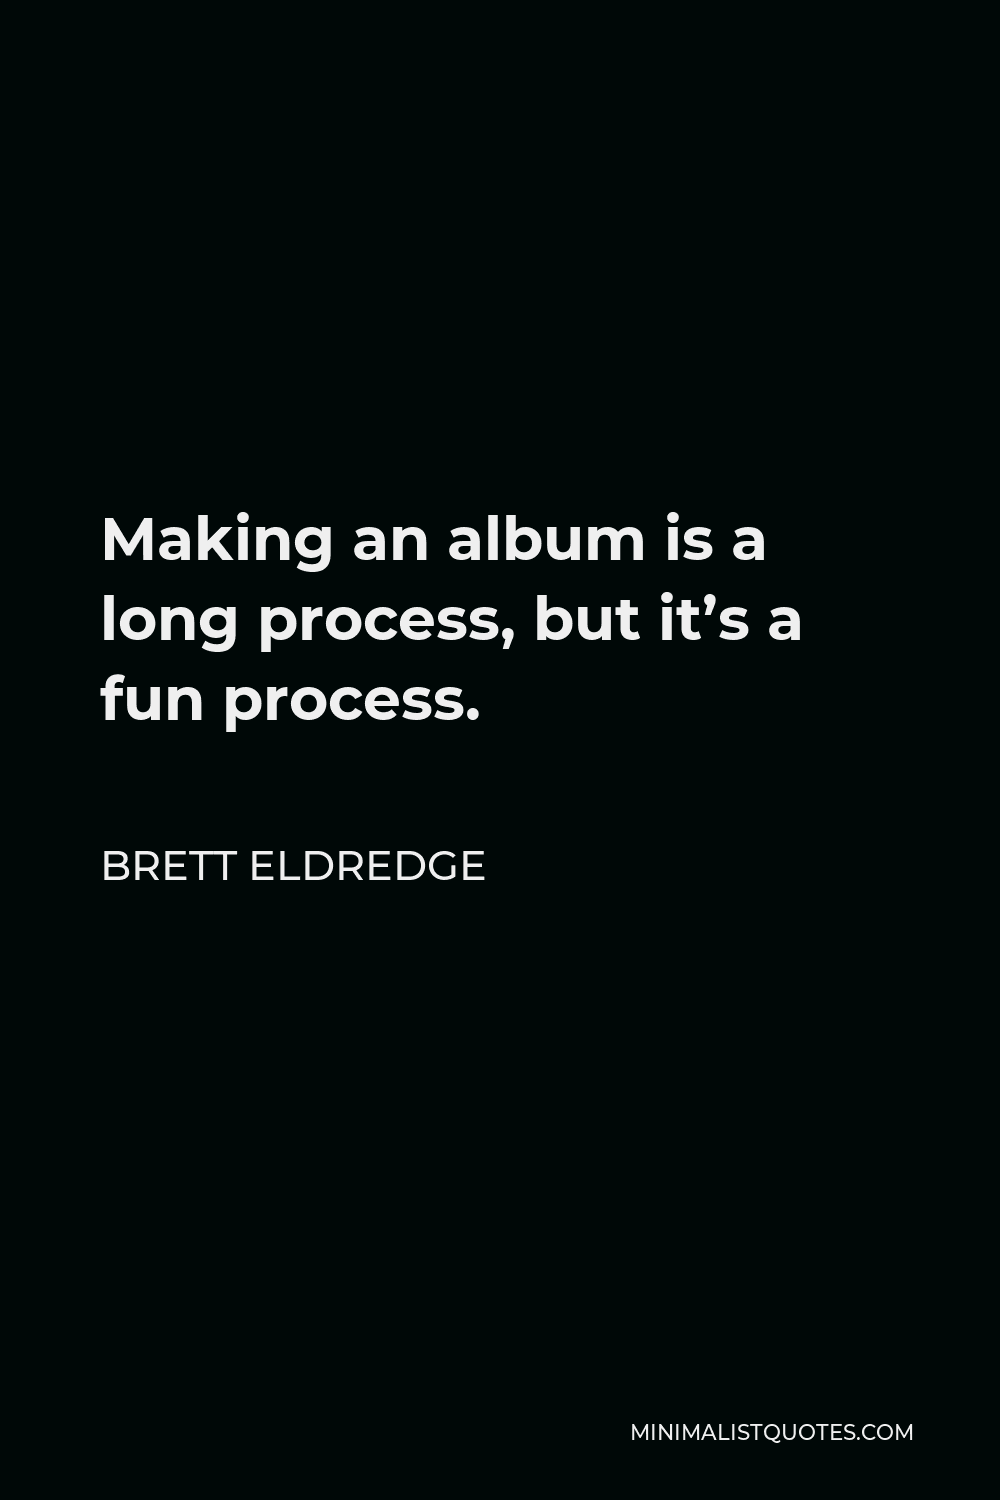 Brett Eldredge Quote - Making an album is a long process, but it’s a fun process.